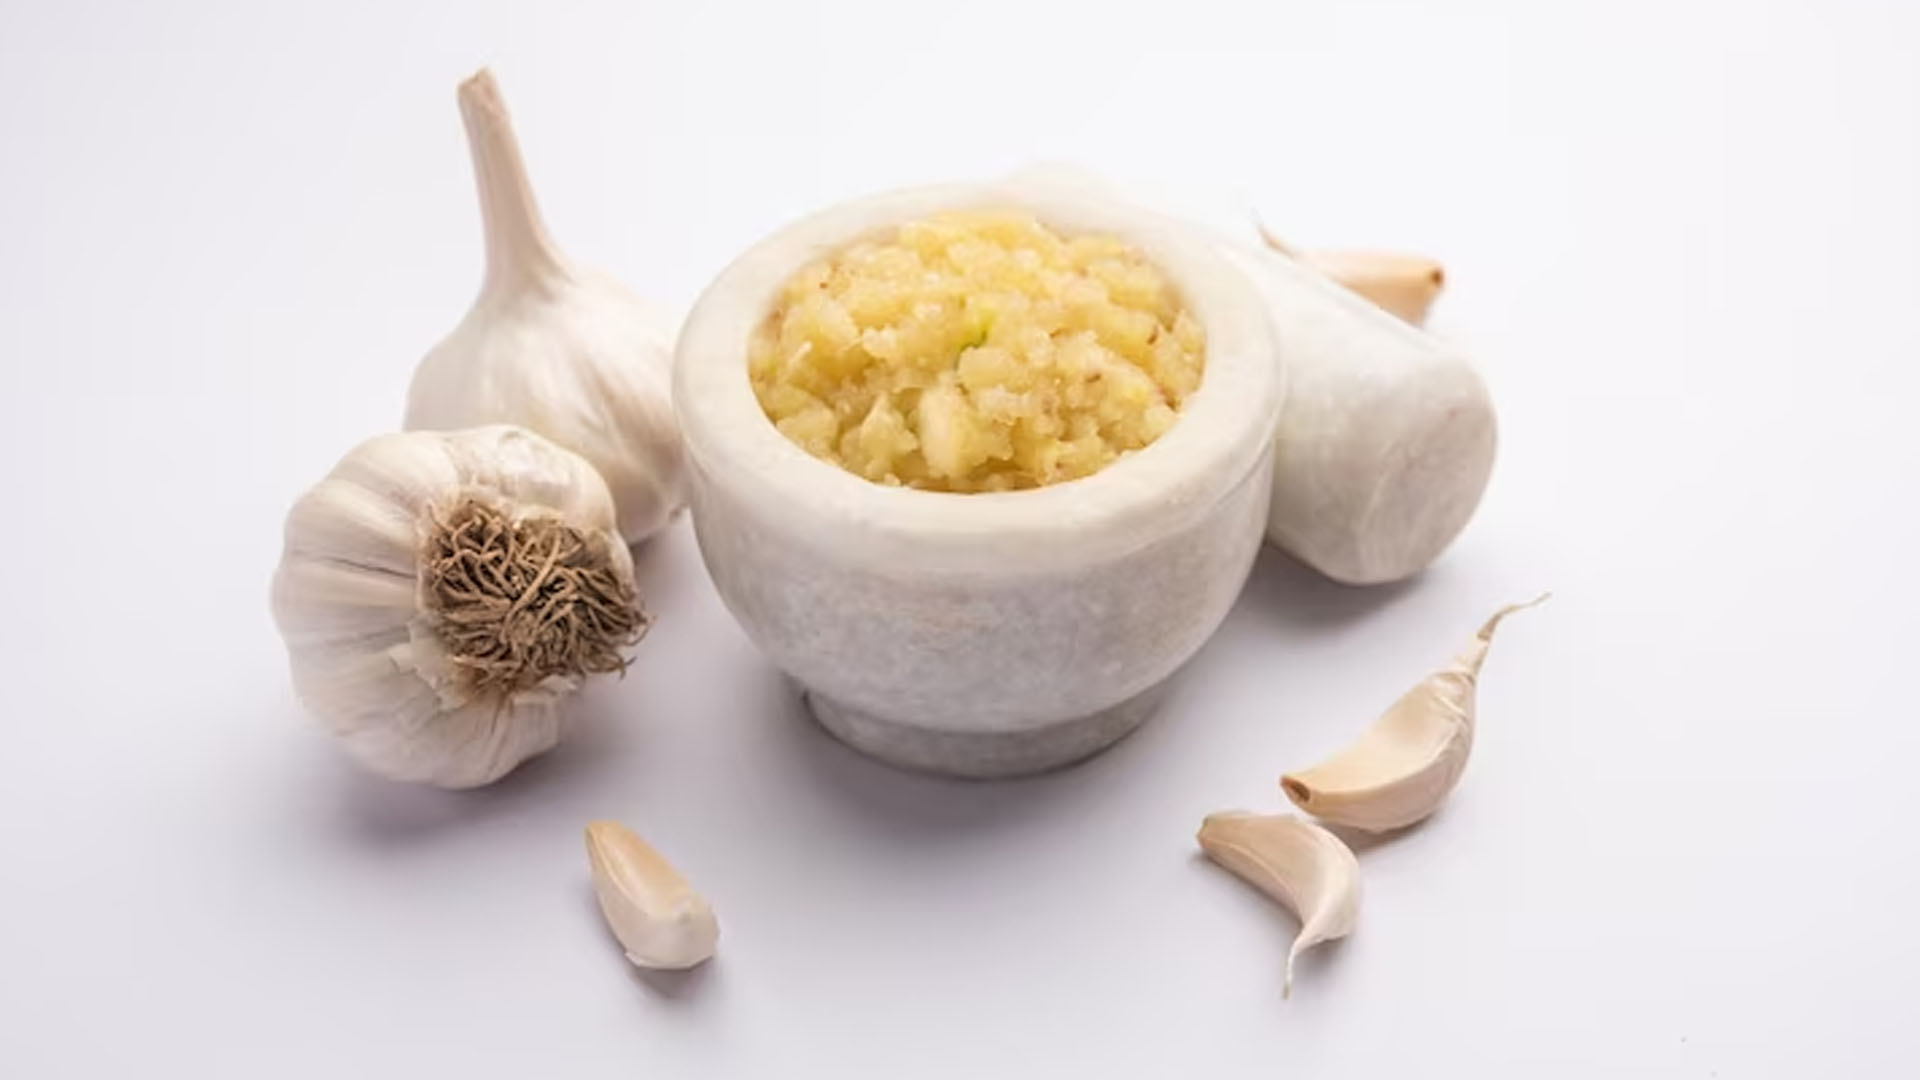 Does Garlic Powder Provide Health Benefits?